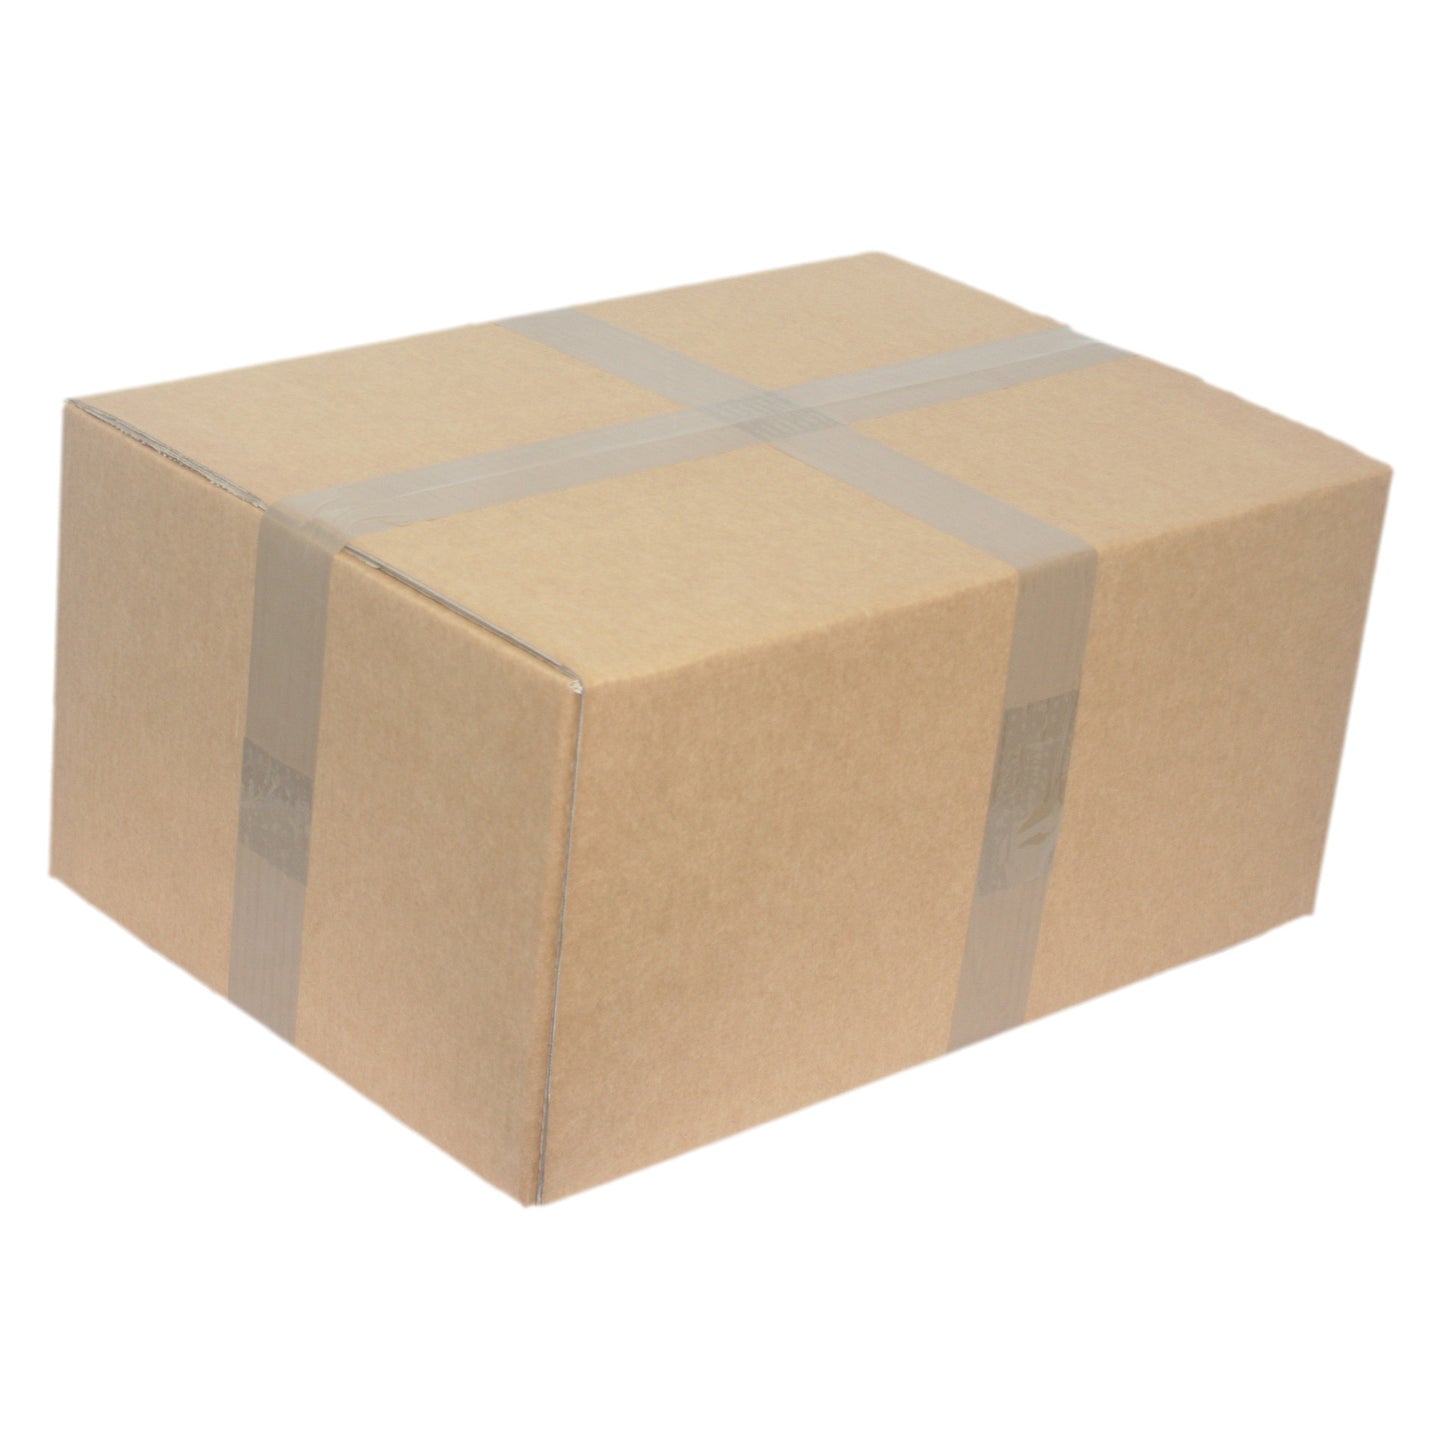 20 Inch Shipping Carton